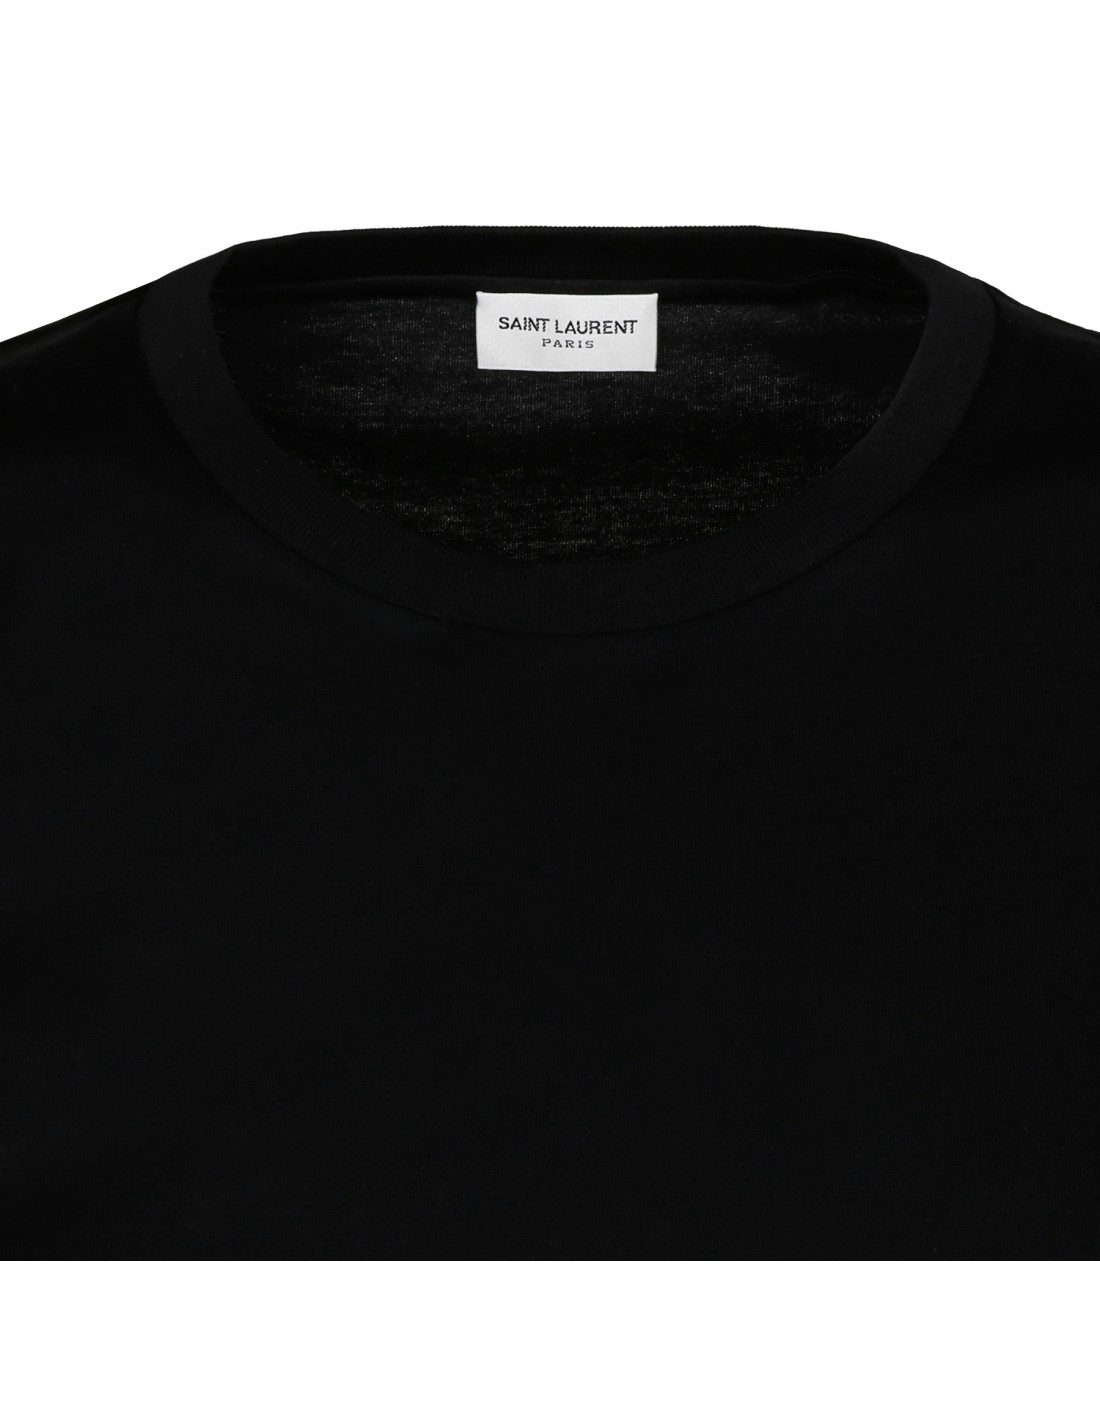 Rive Gauche black T-shirt